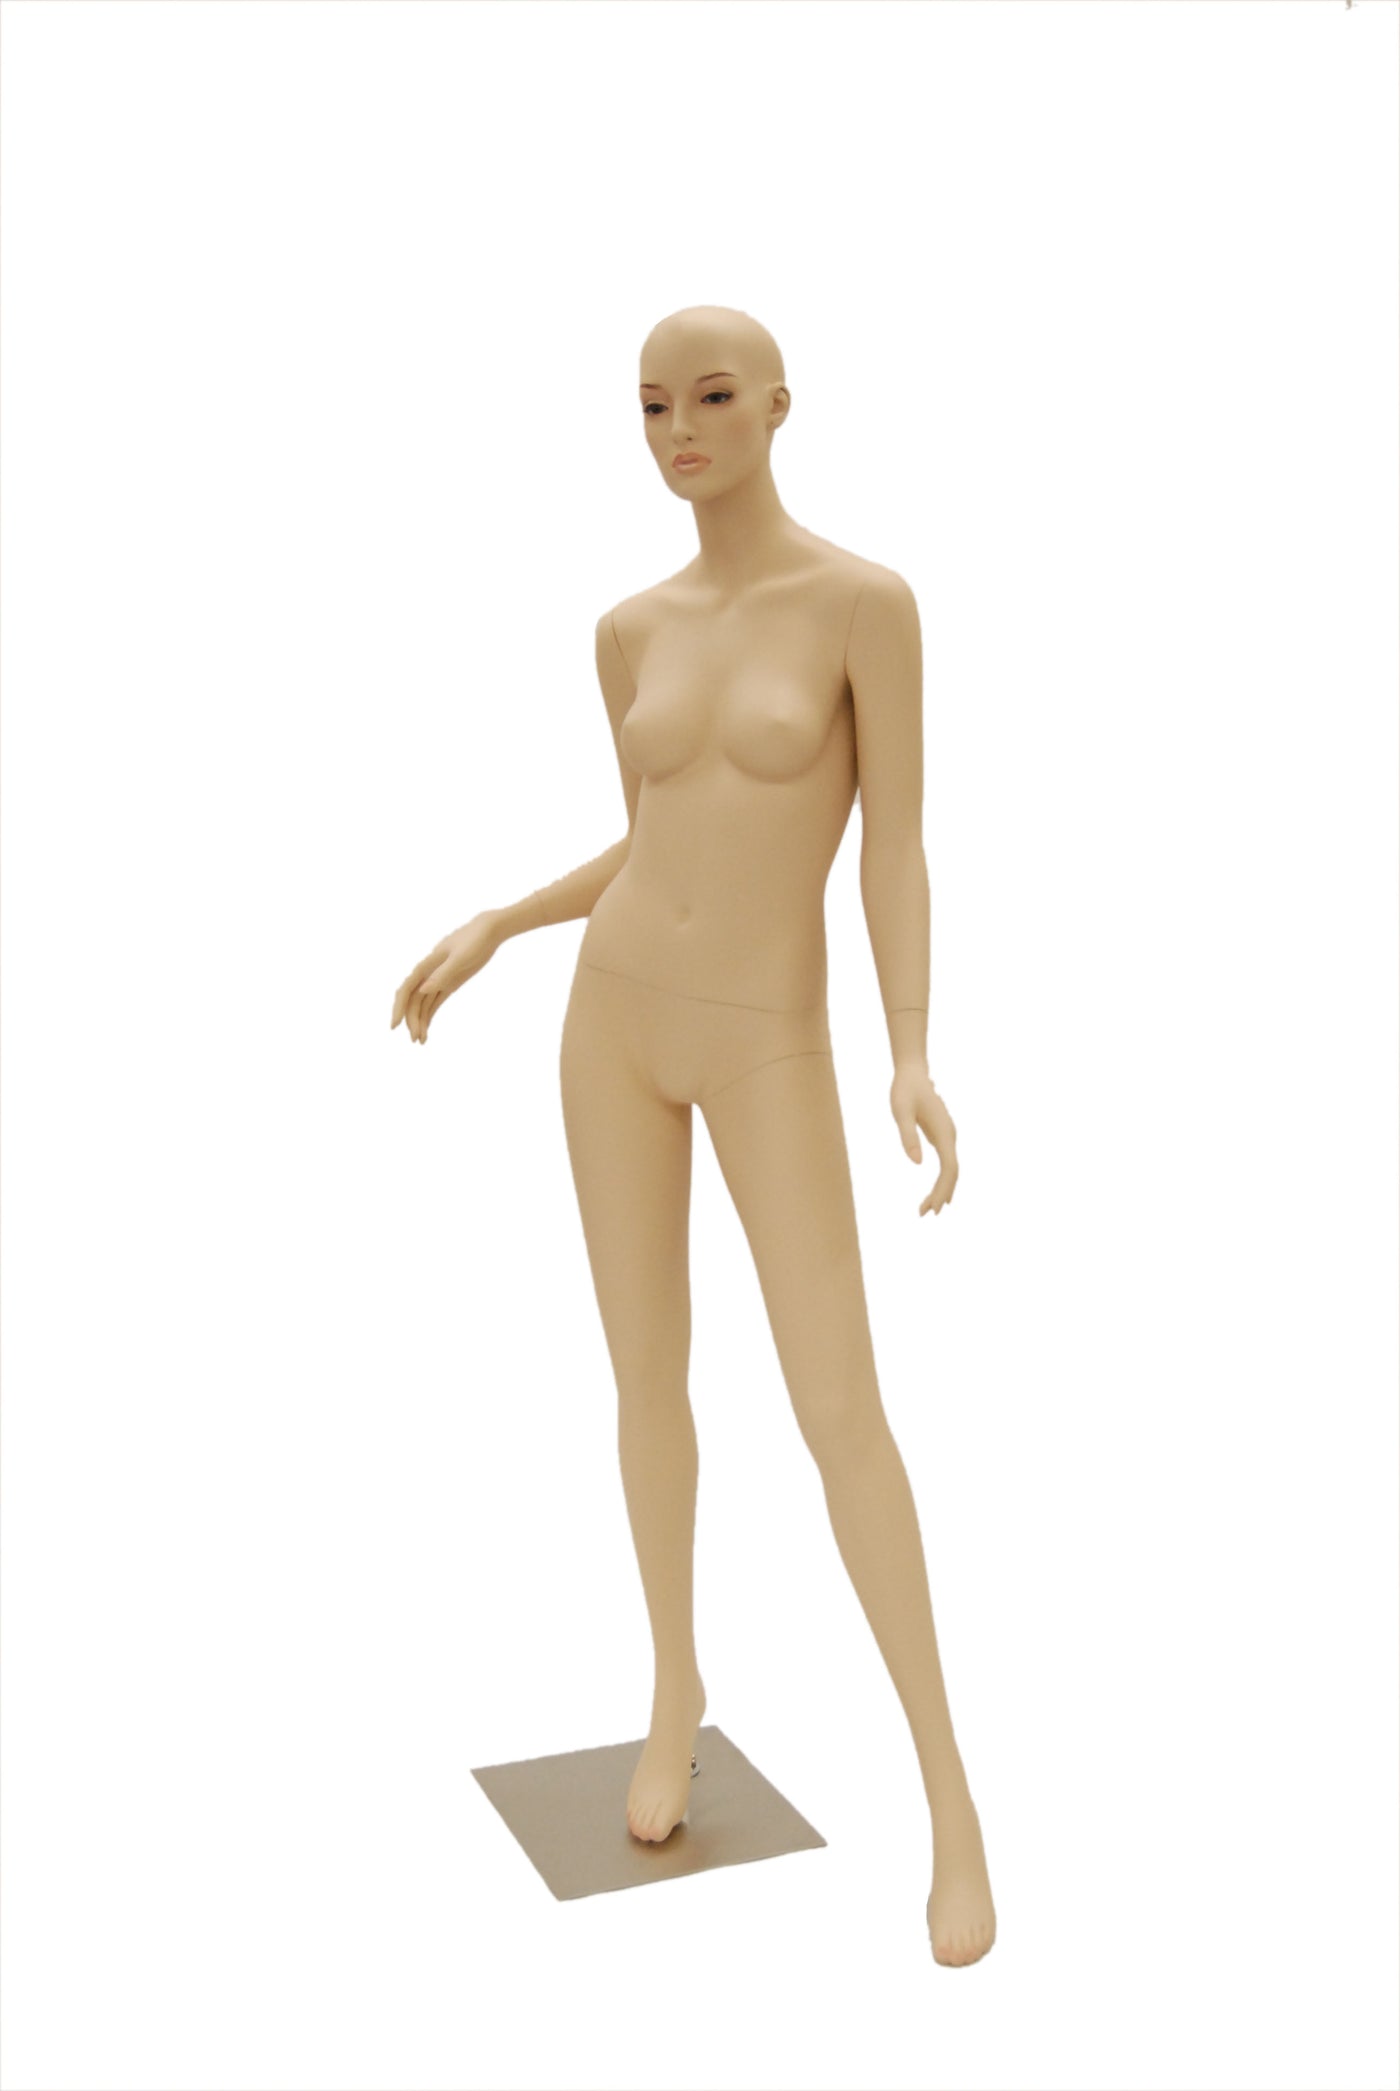 Emma 2: Realistic Female Mannequin